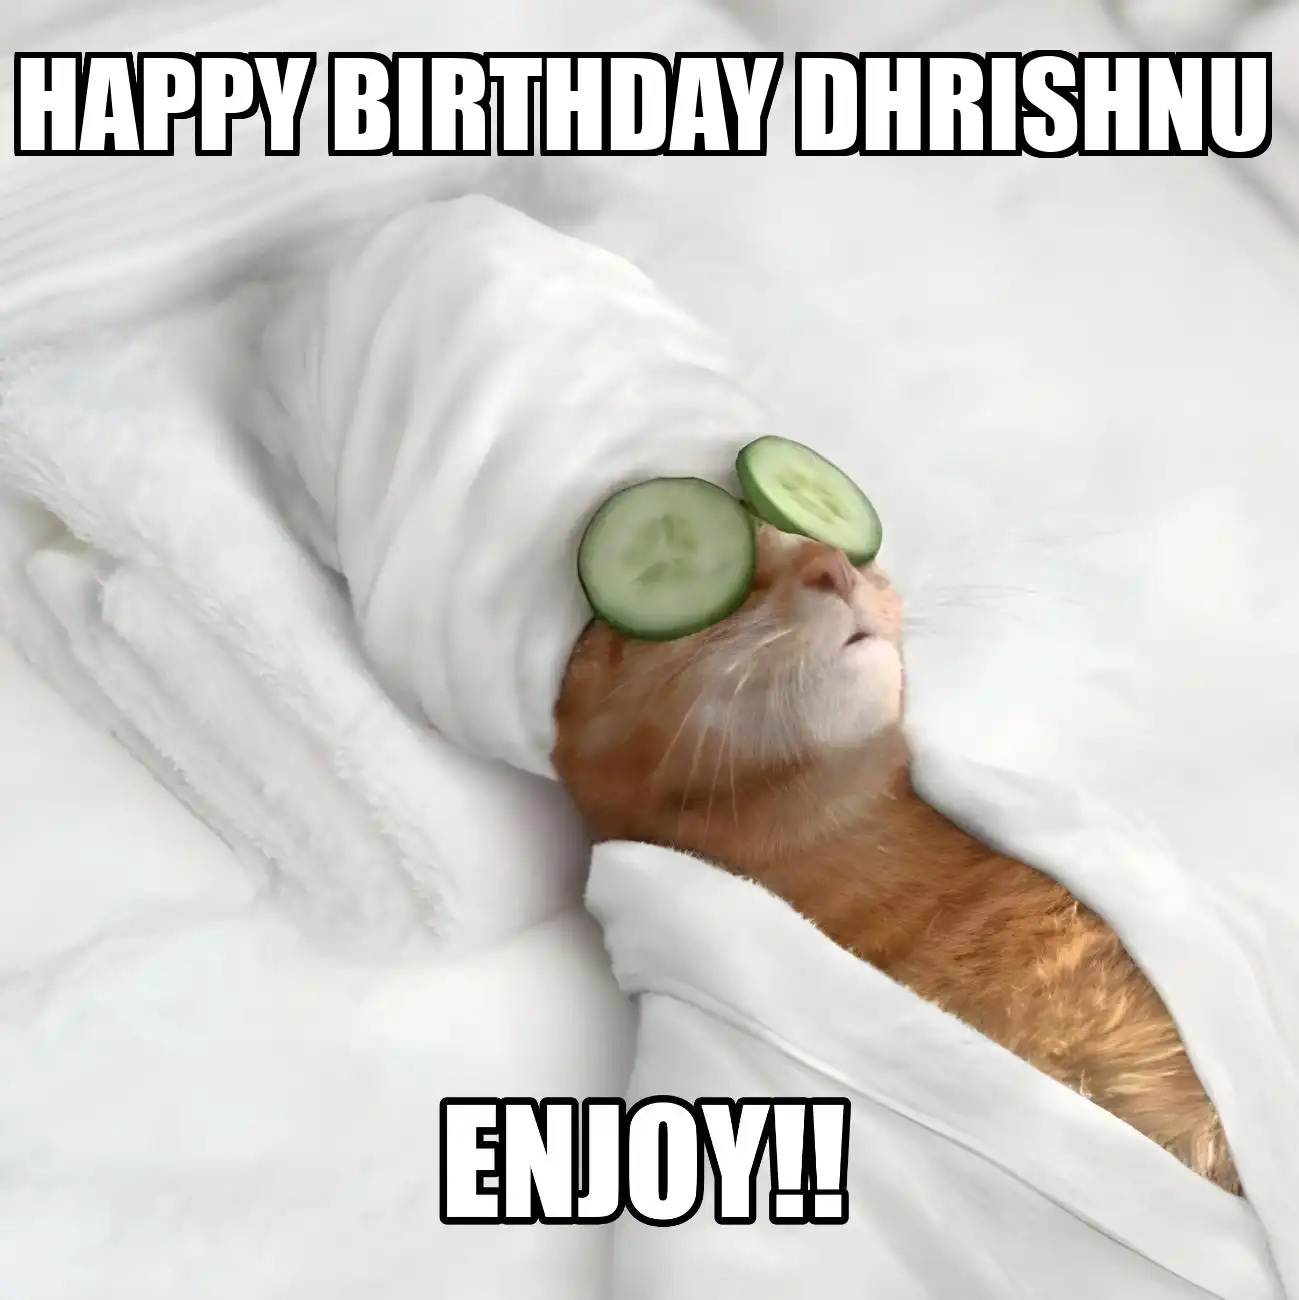 Happy Birthday Dhrishnu Enjoy Cat Meme